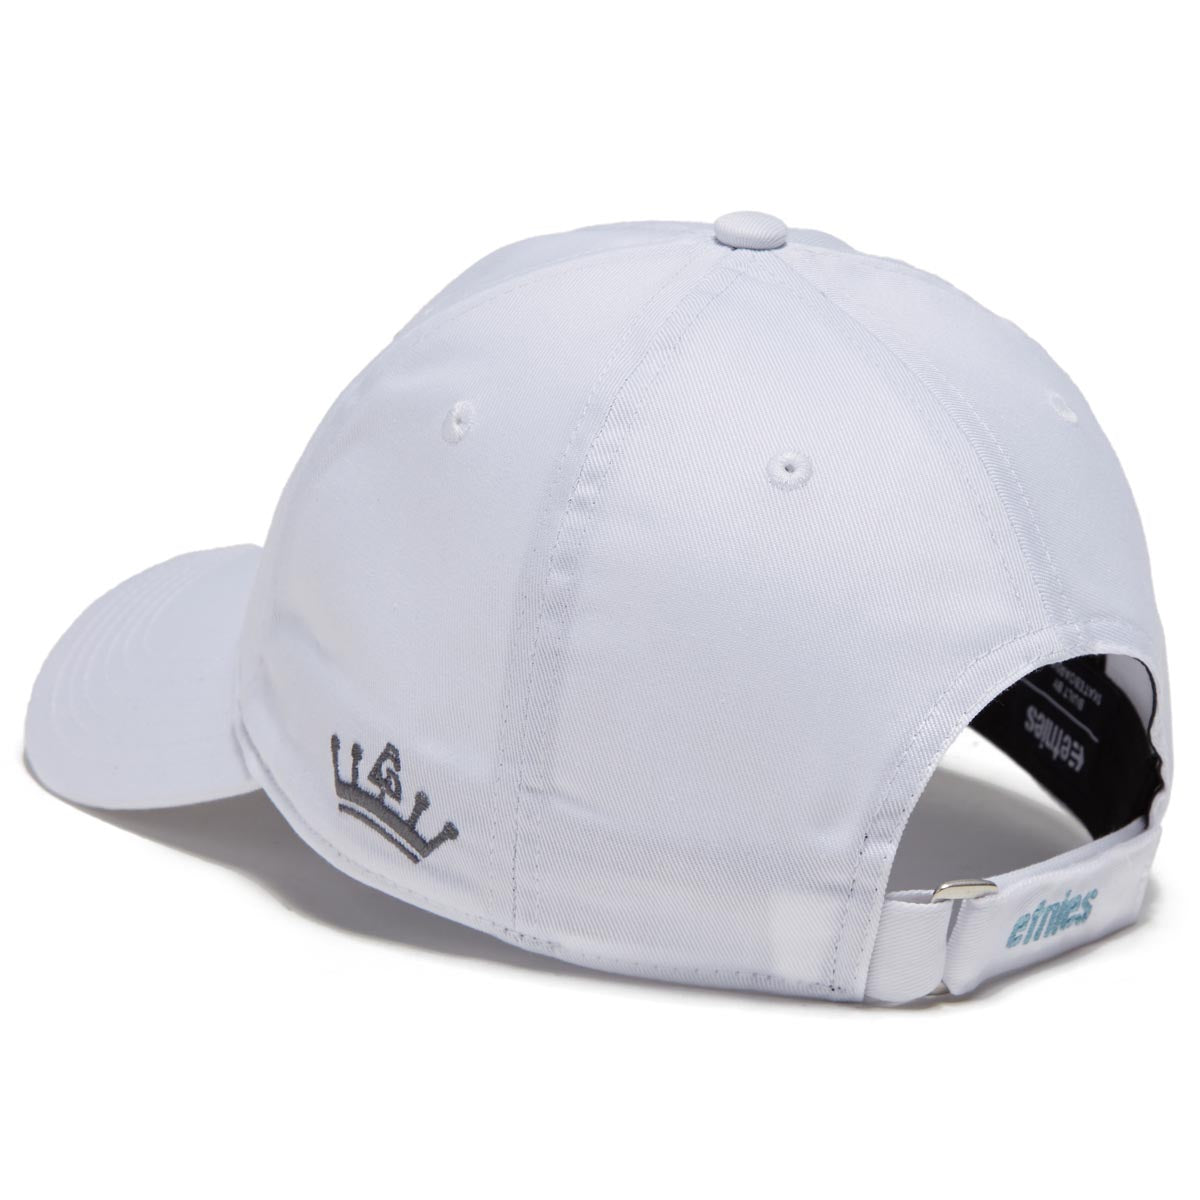 Etnies AG Snapback Hat - White/Powder image 2